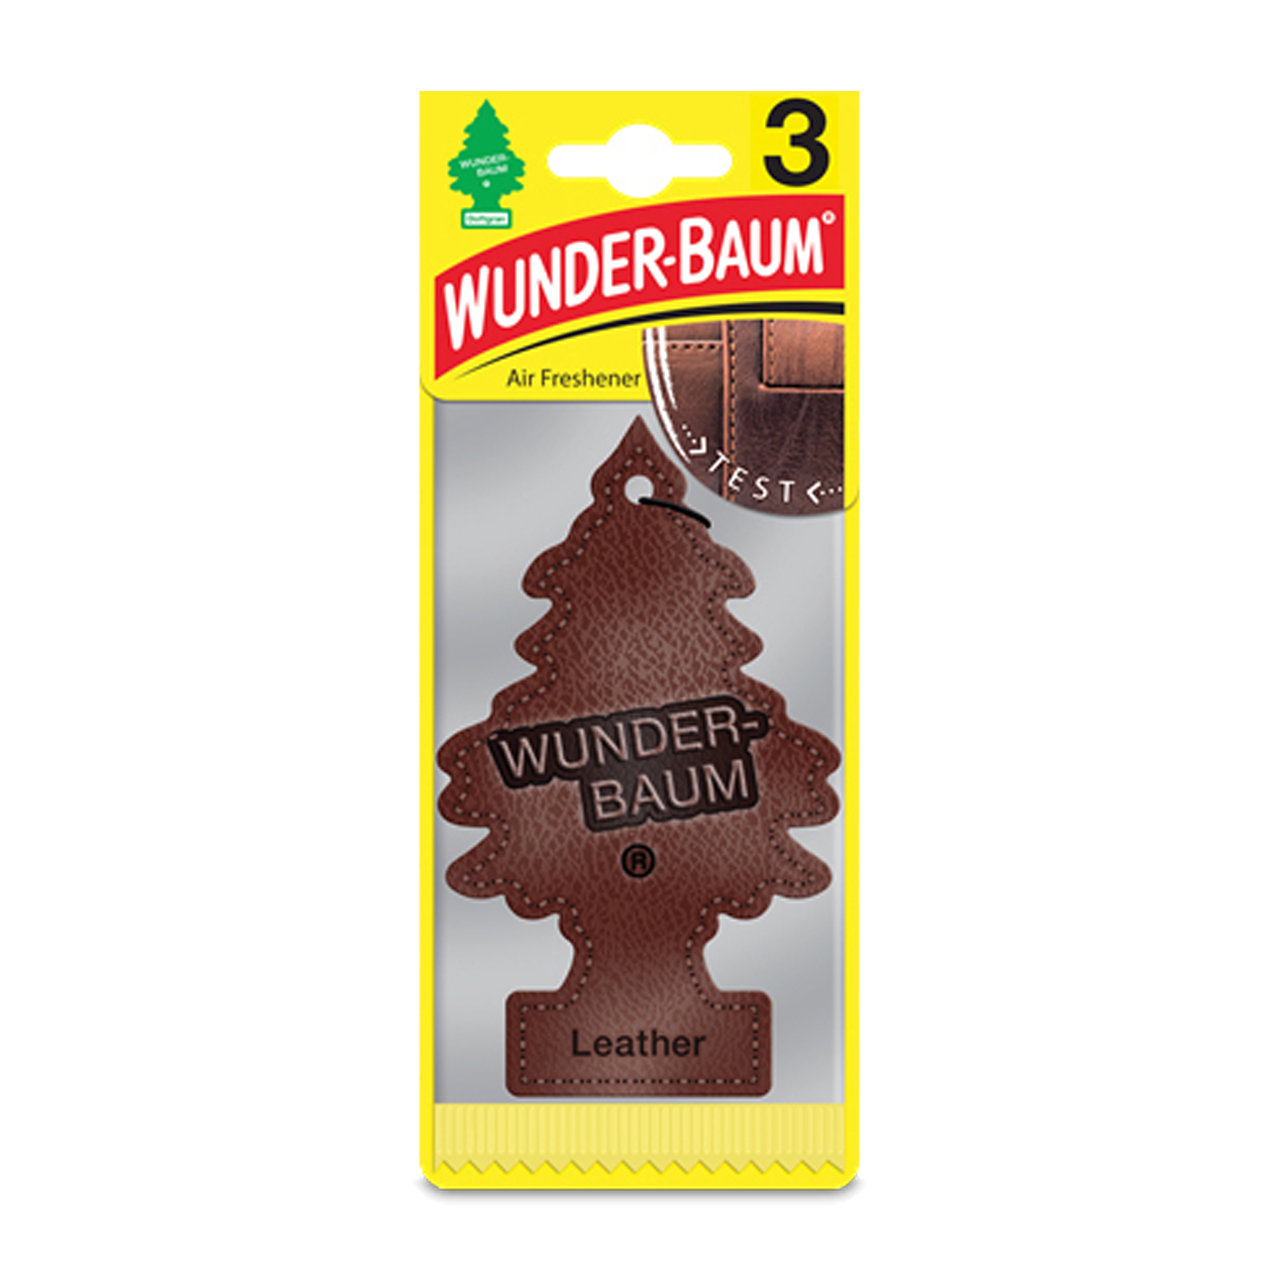 Wunder-Baum Air Freshener Leather 3-Pack - Dirt cheap price!